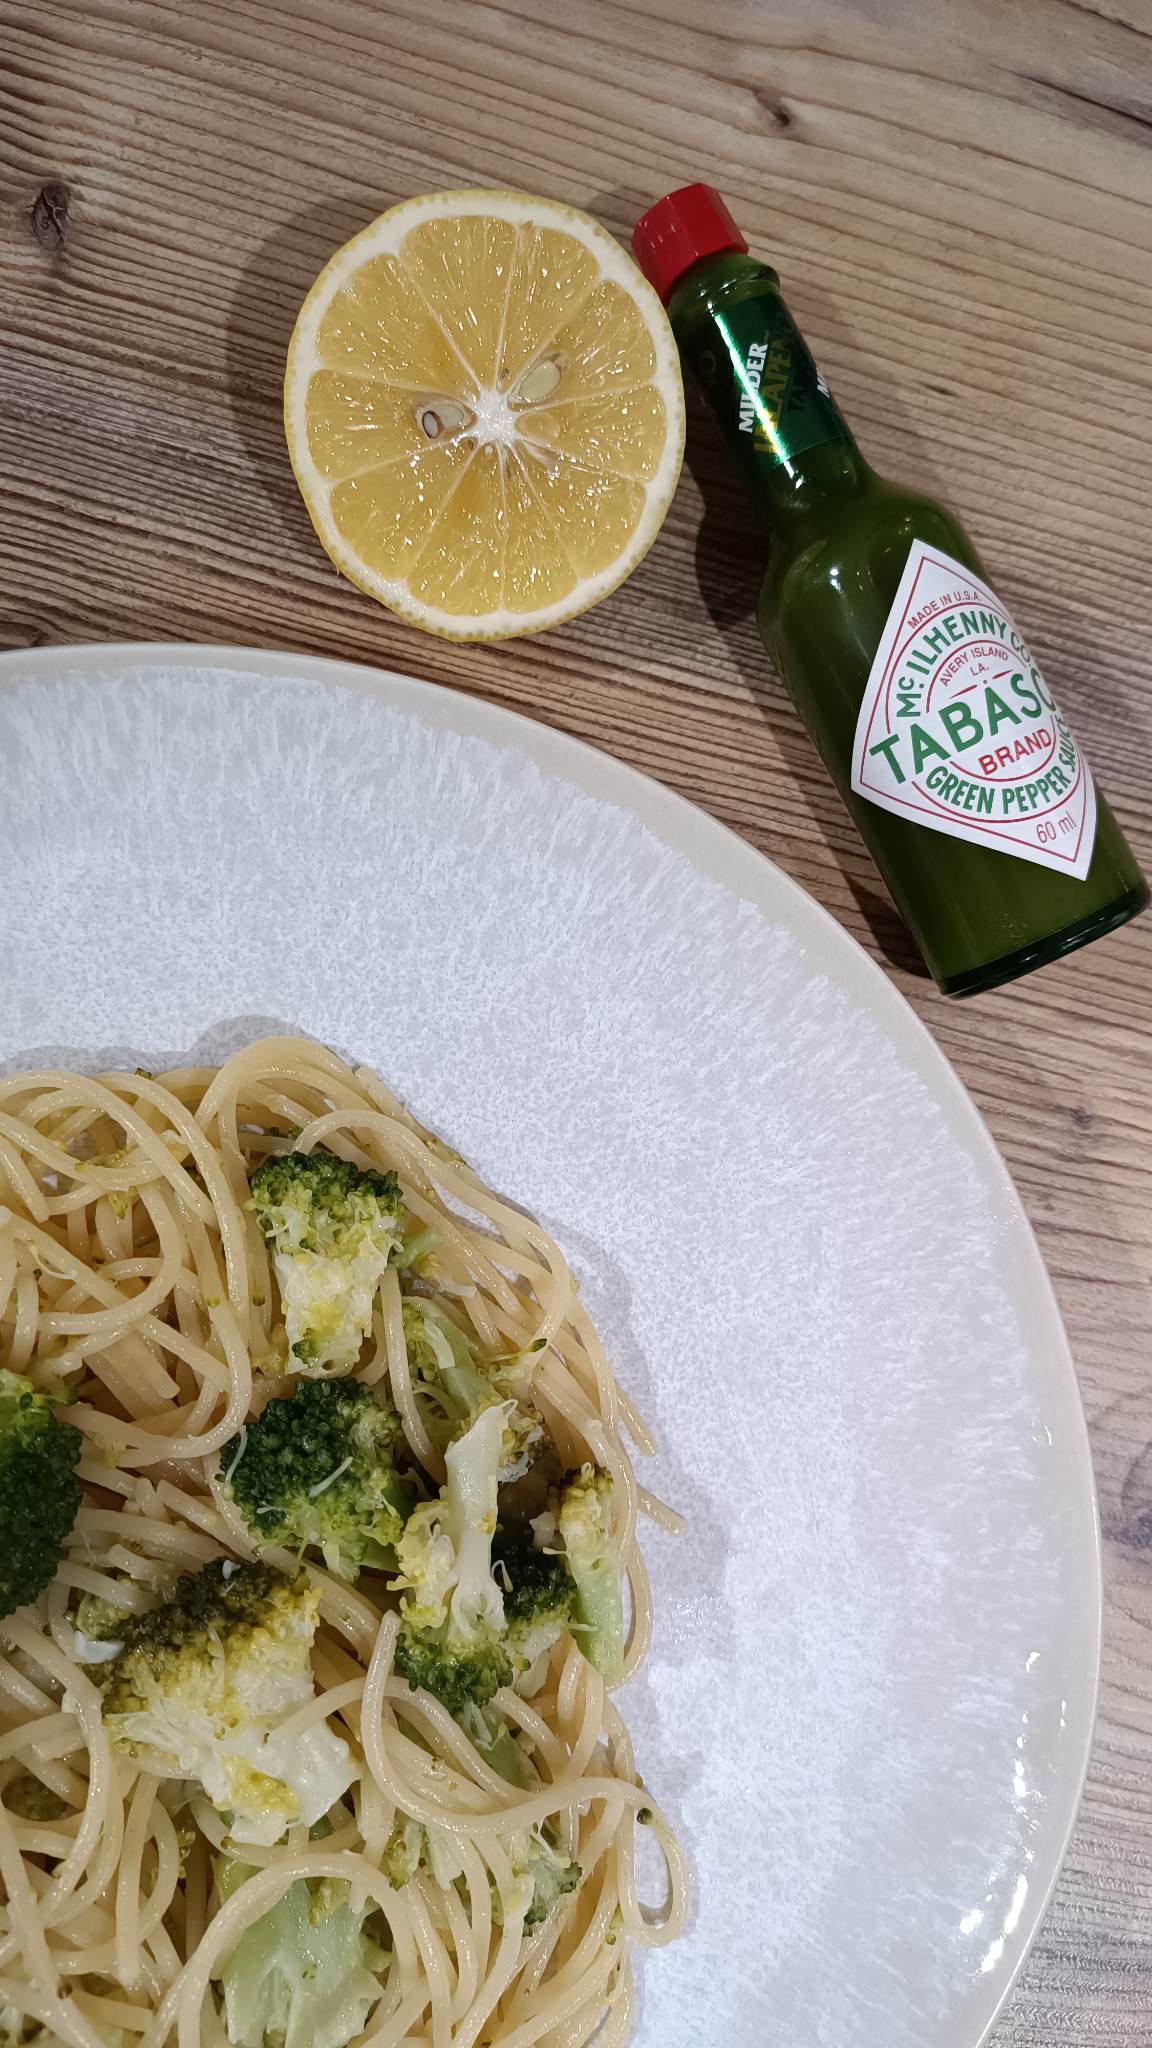 Extravagant chef: jeste li ikad probali spicy špagete s brokulom i limunom?